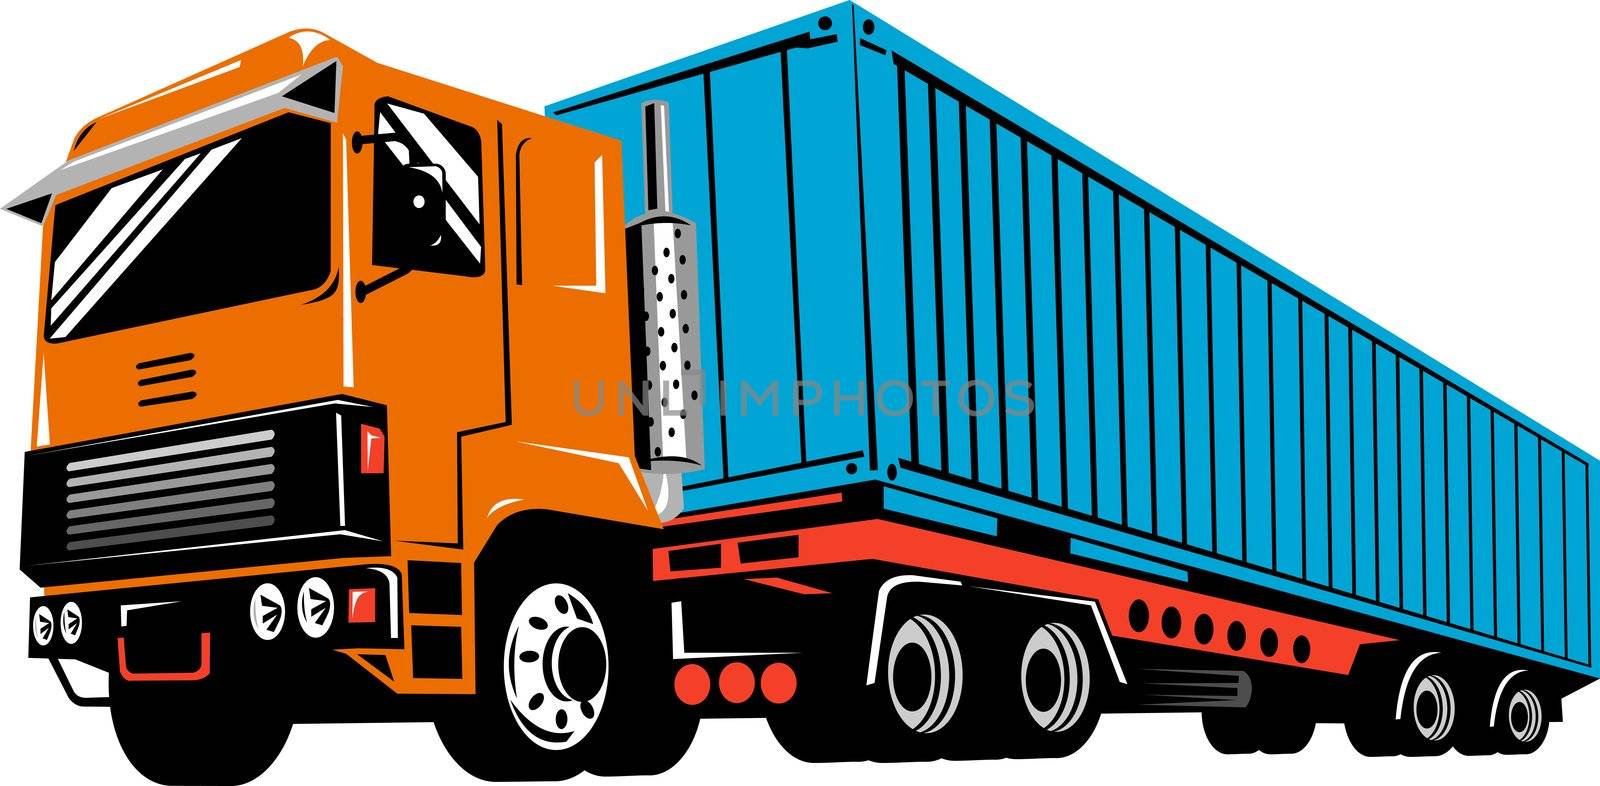 truck lorry retro by patrimonio